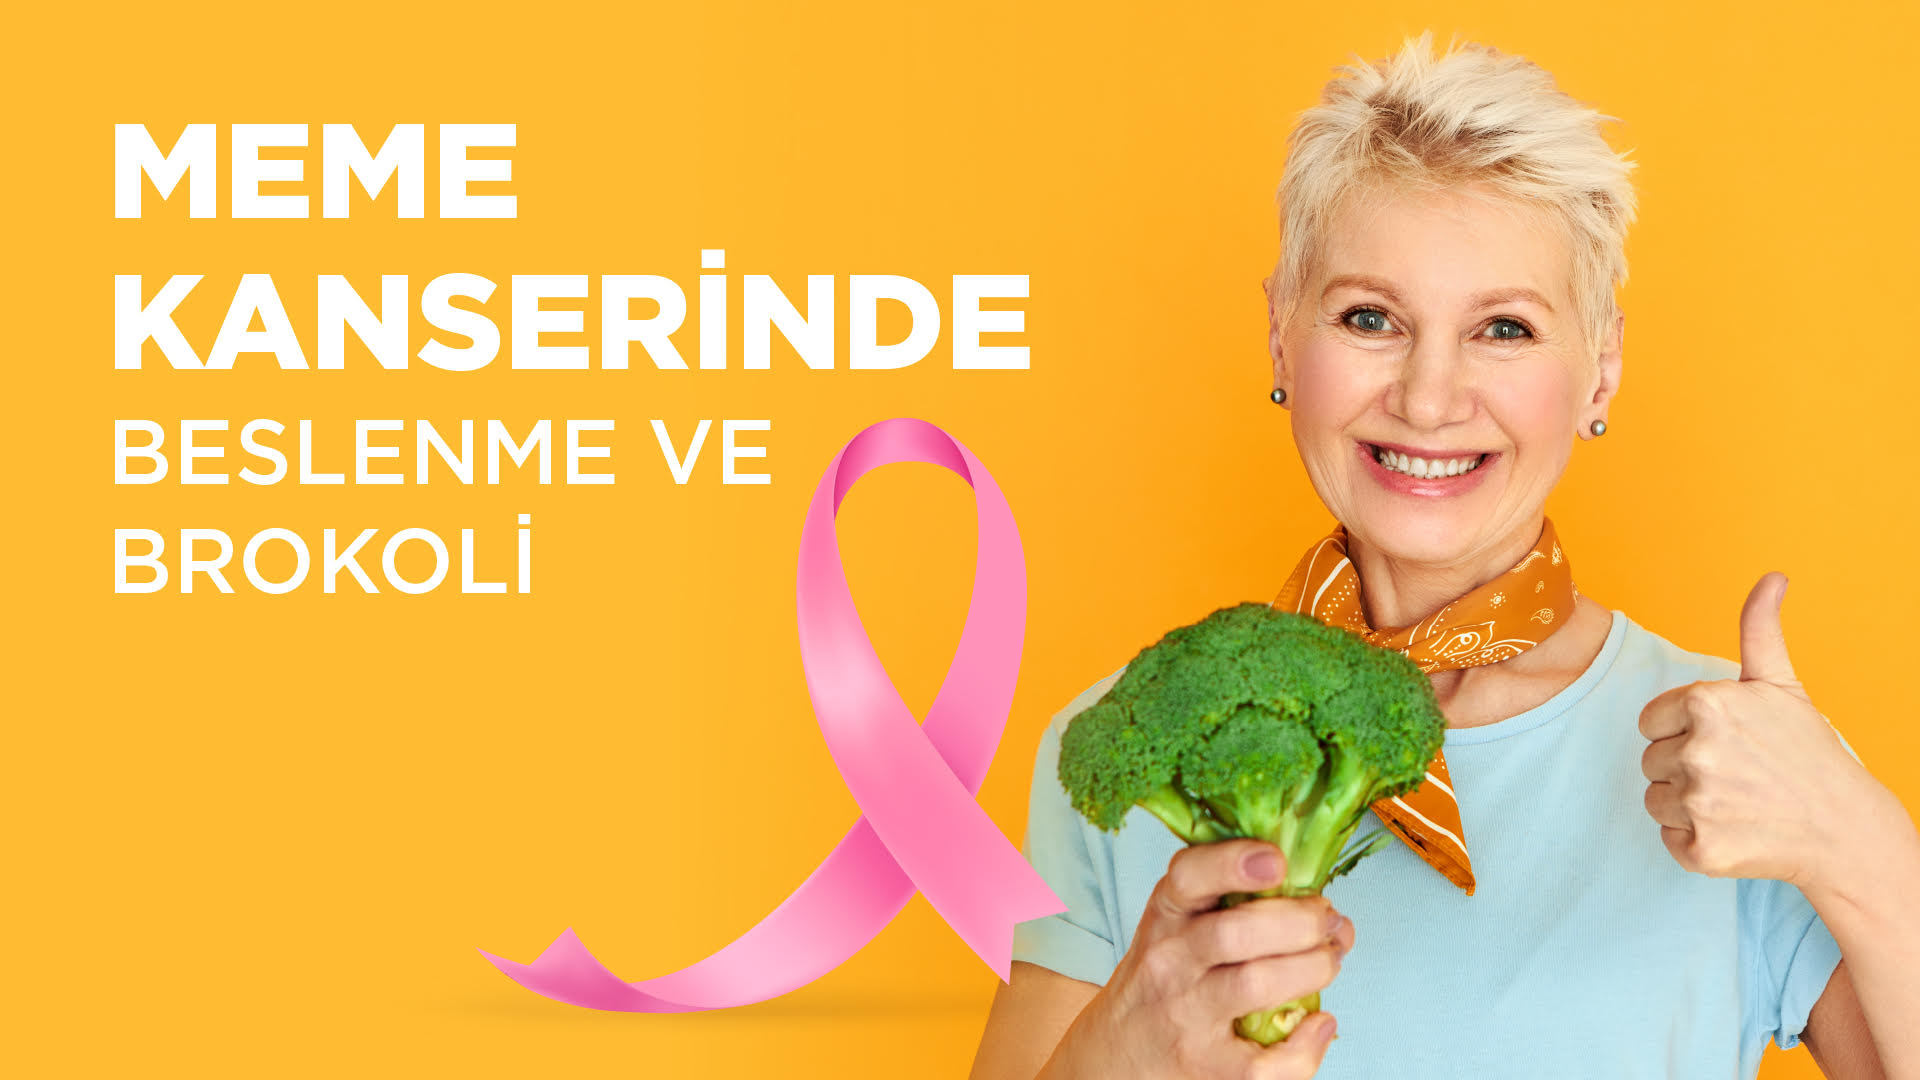 Meme Kanserinde Beslenme ve Brokoli - Vitafenix